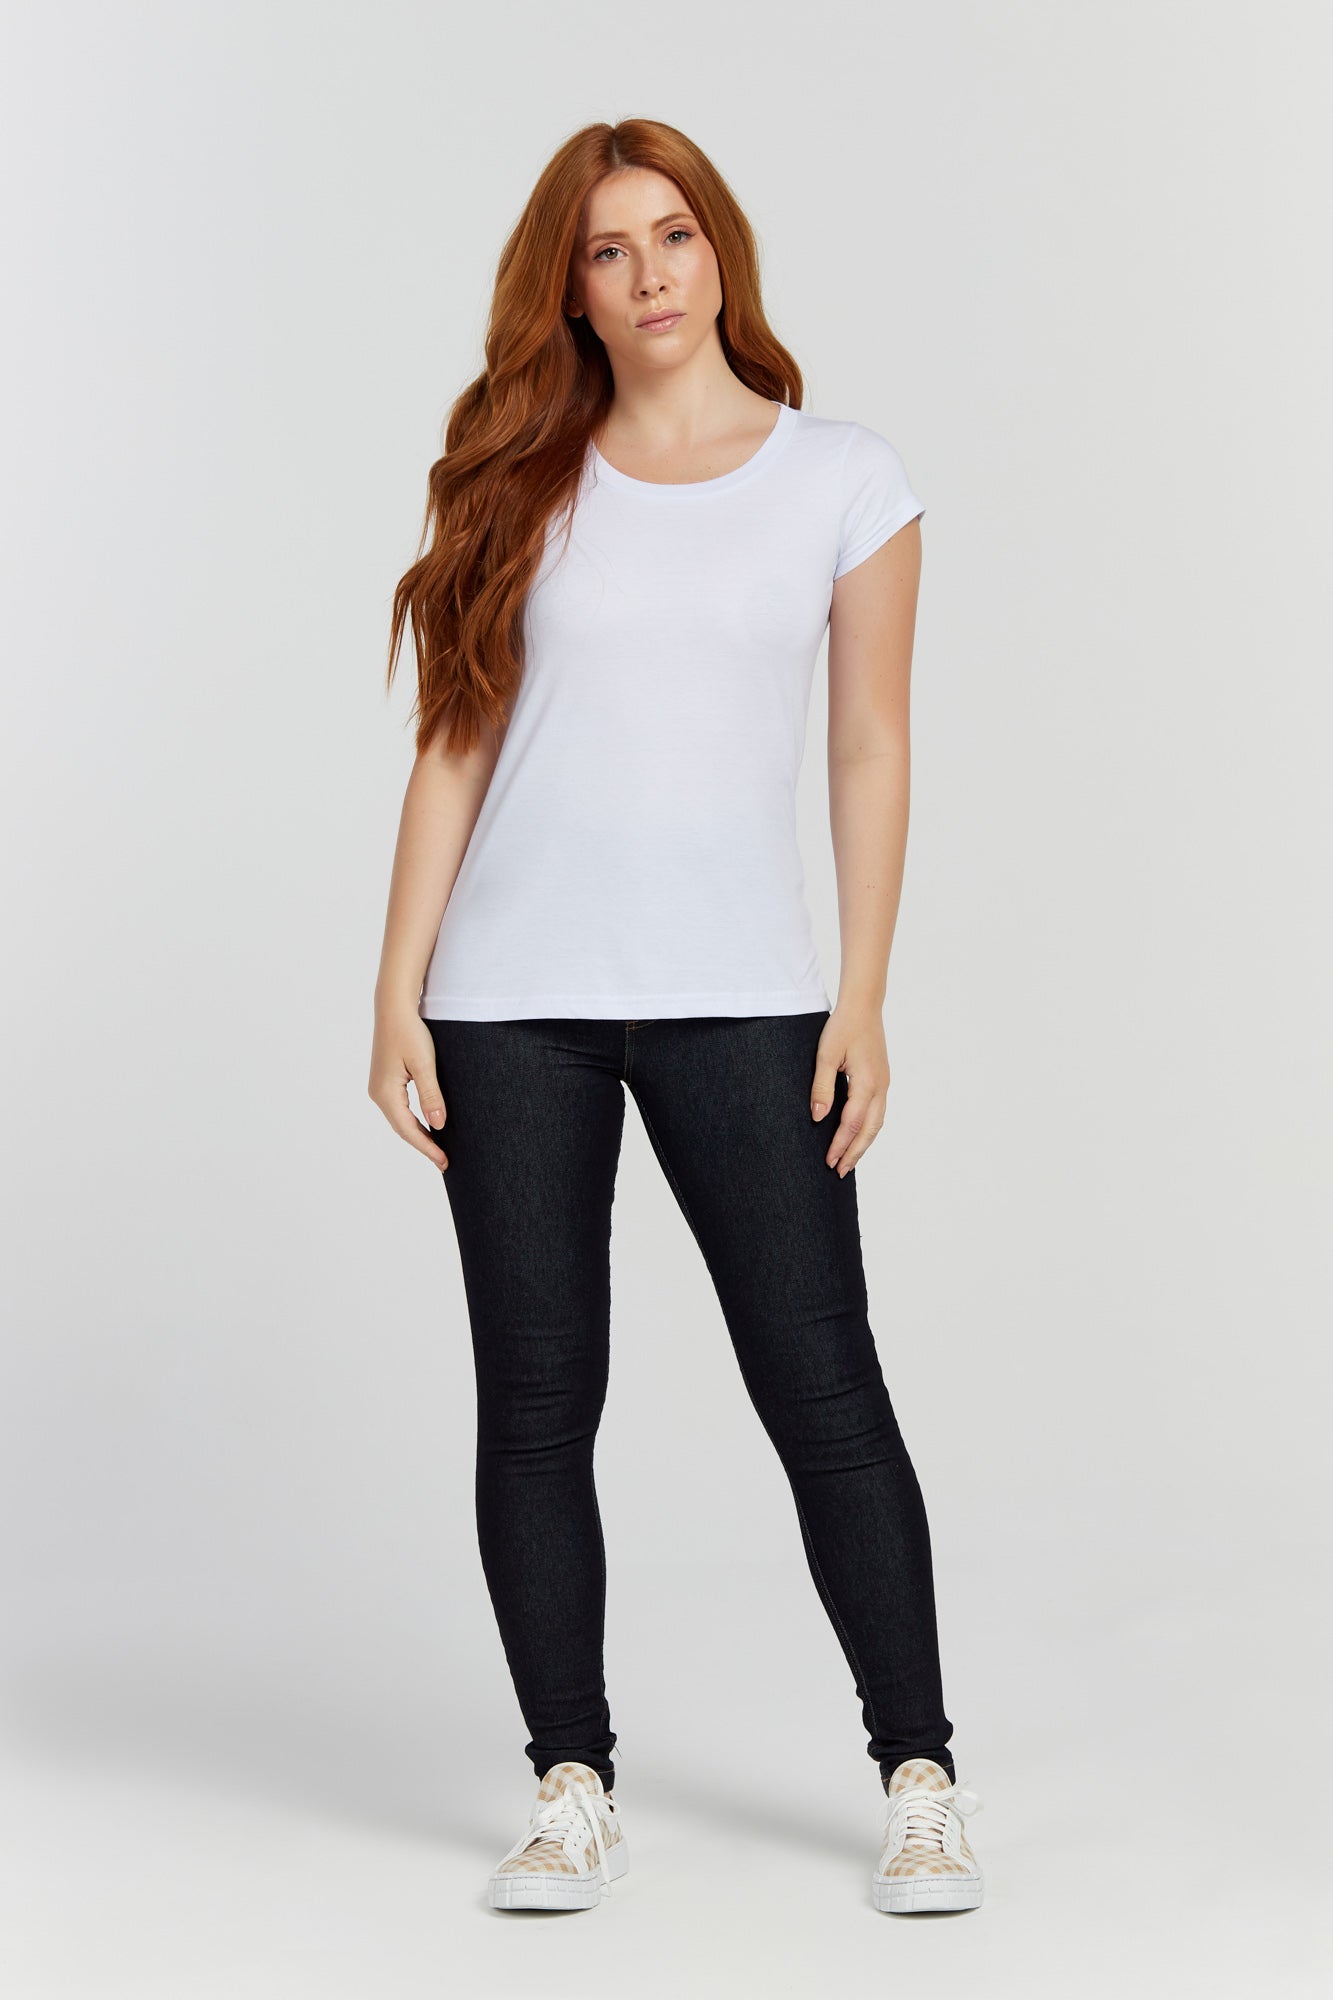 Premium Photo  A model wears a white t - shirt and black leggings